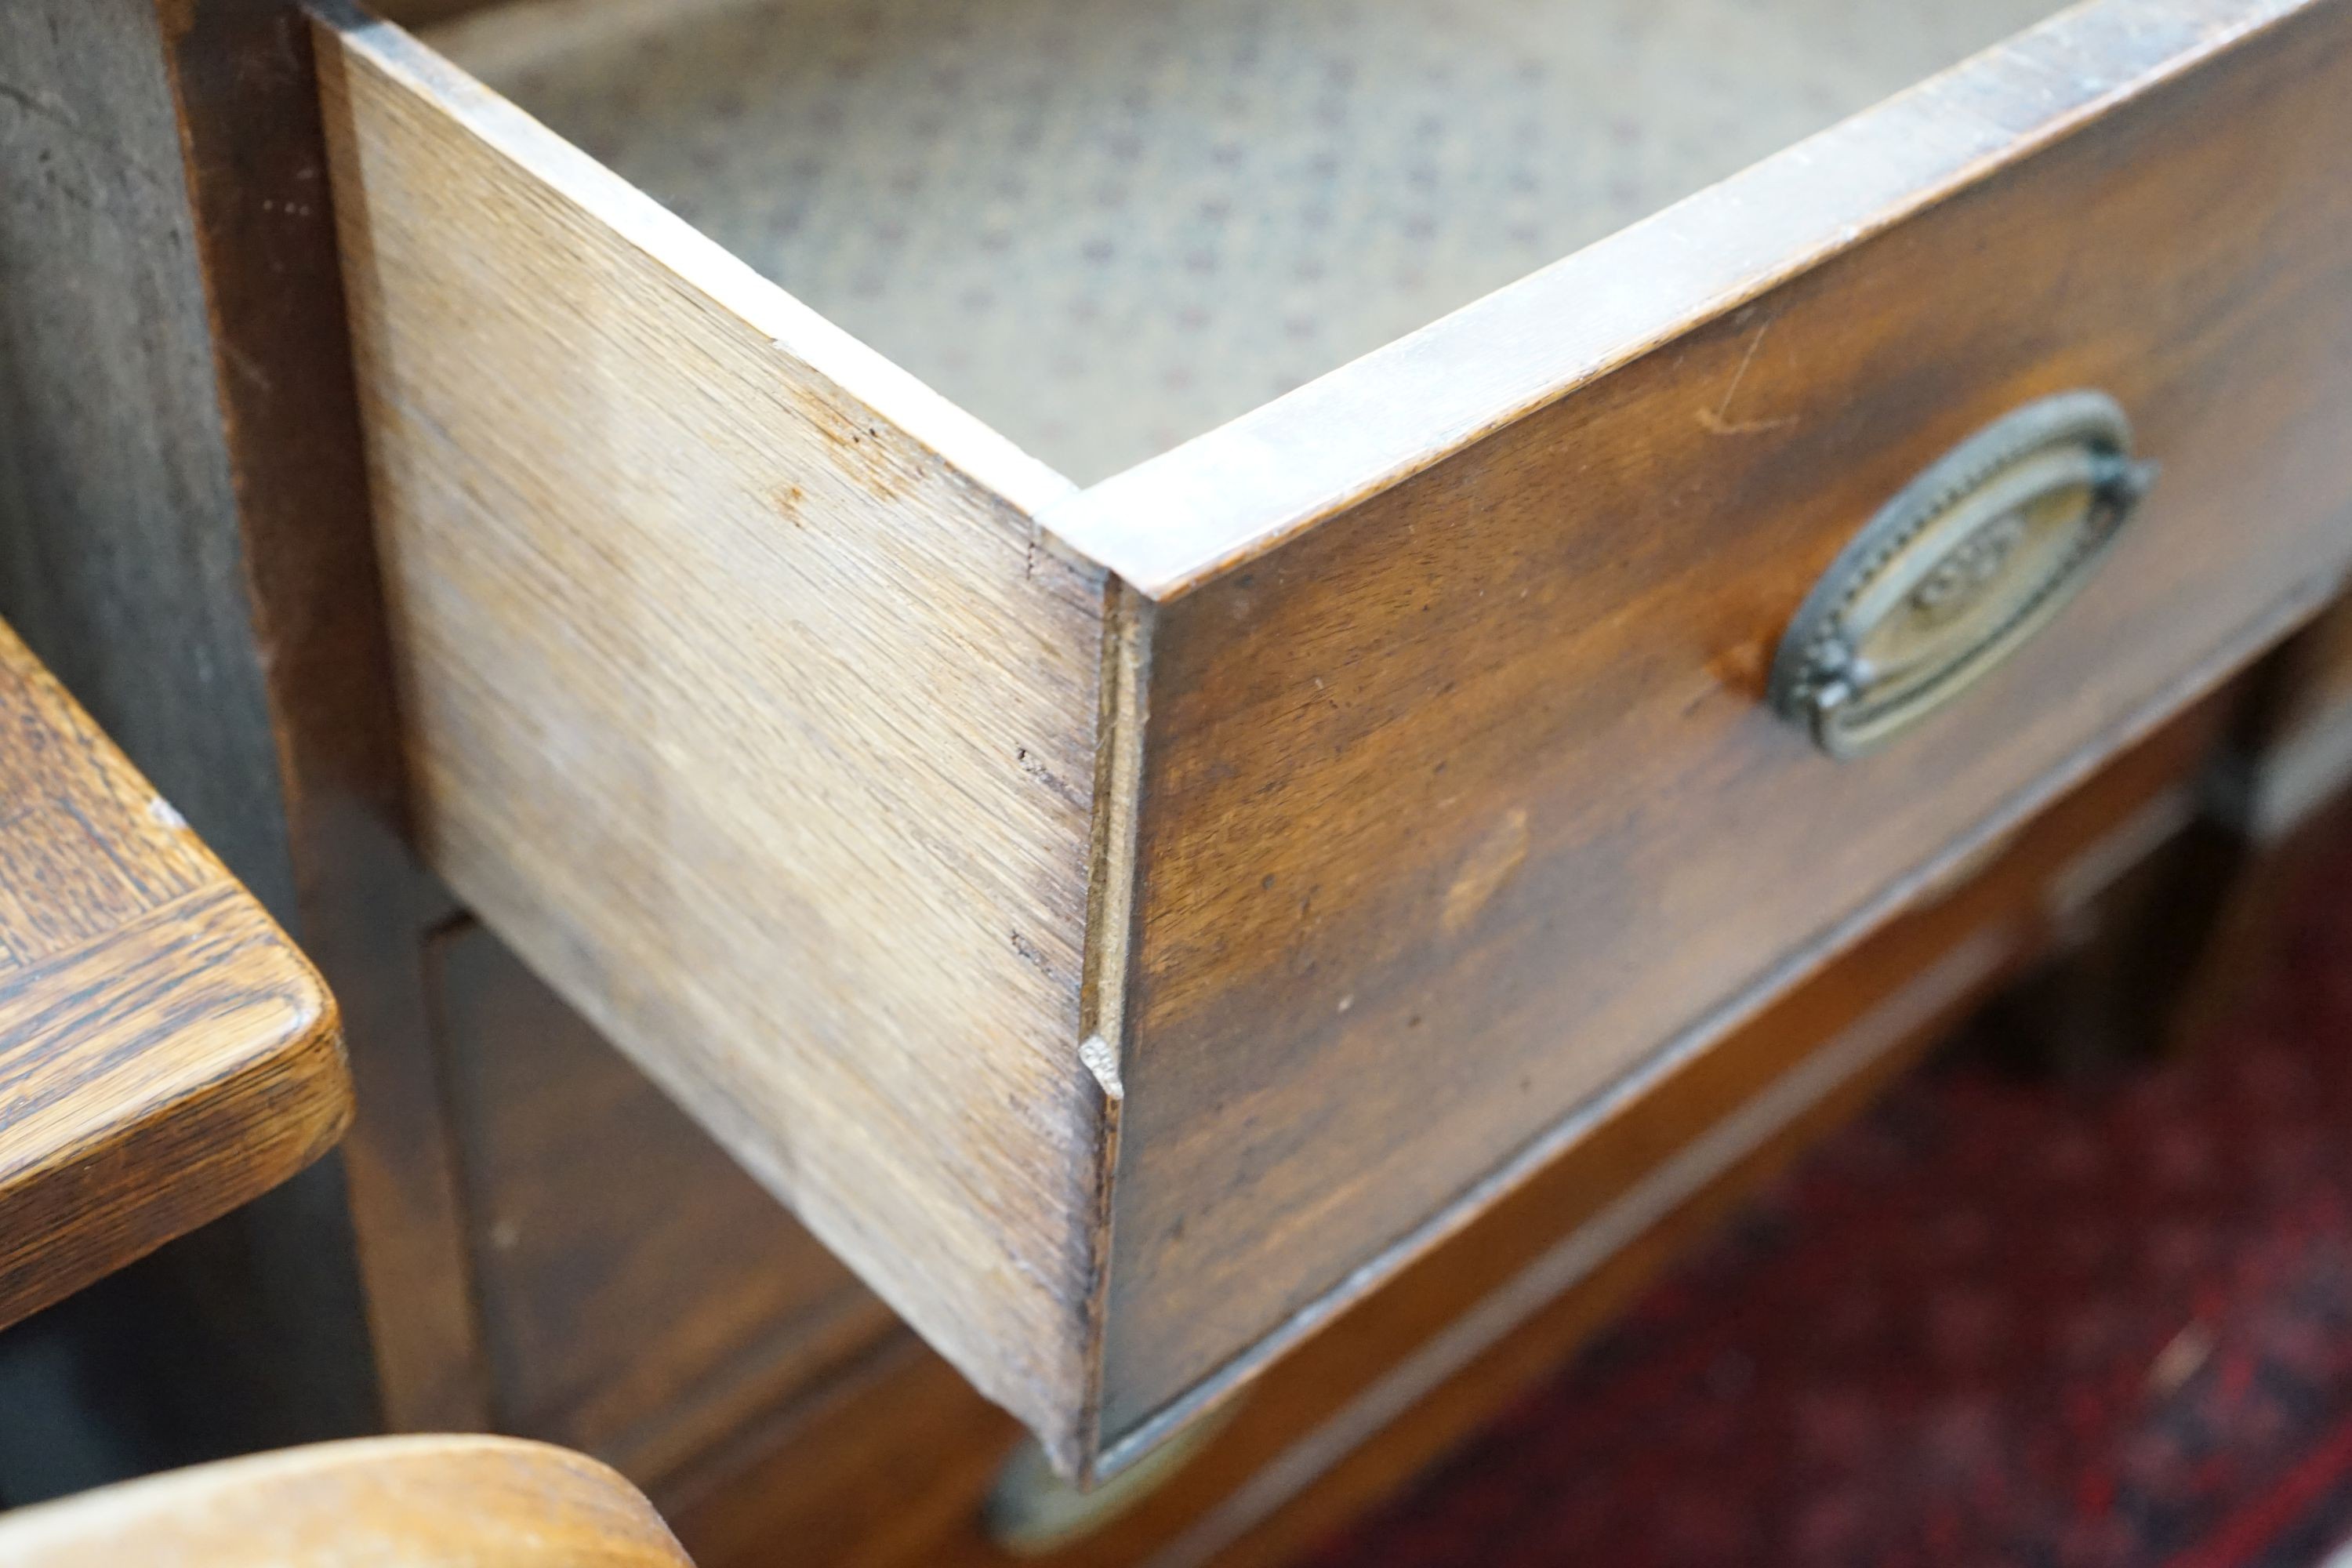 A Regency mahogany three drawer chest, width 91cm, depth 47cm, height 87cm